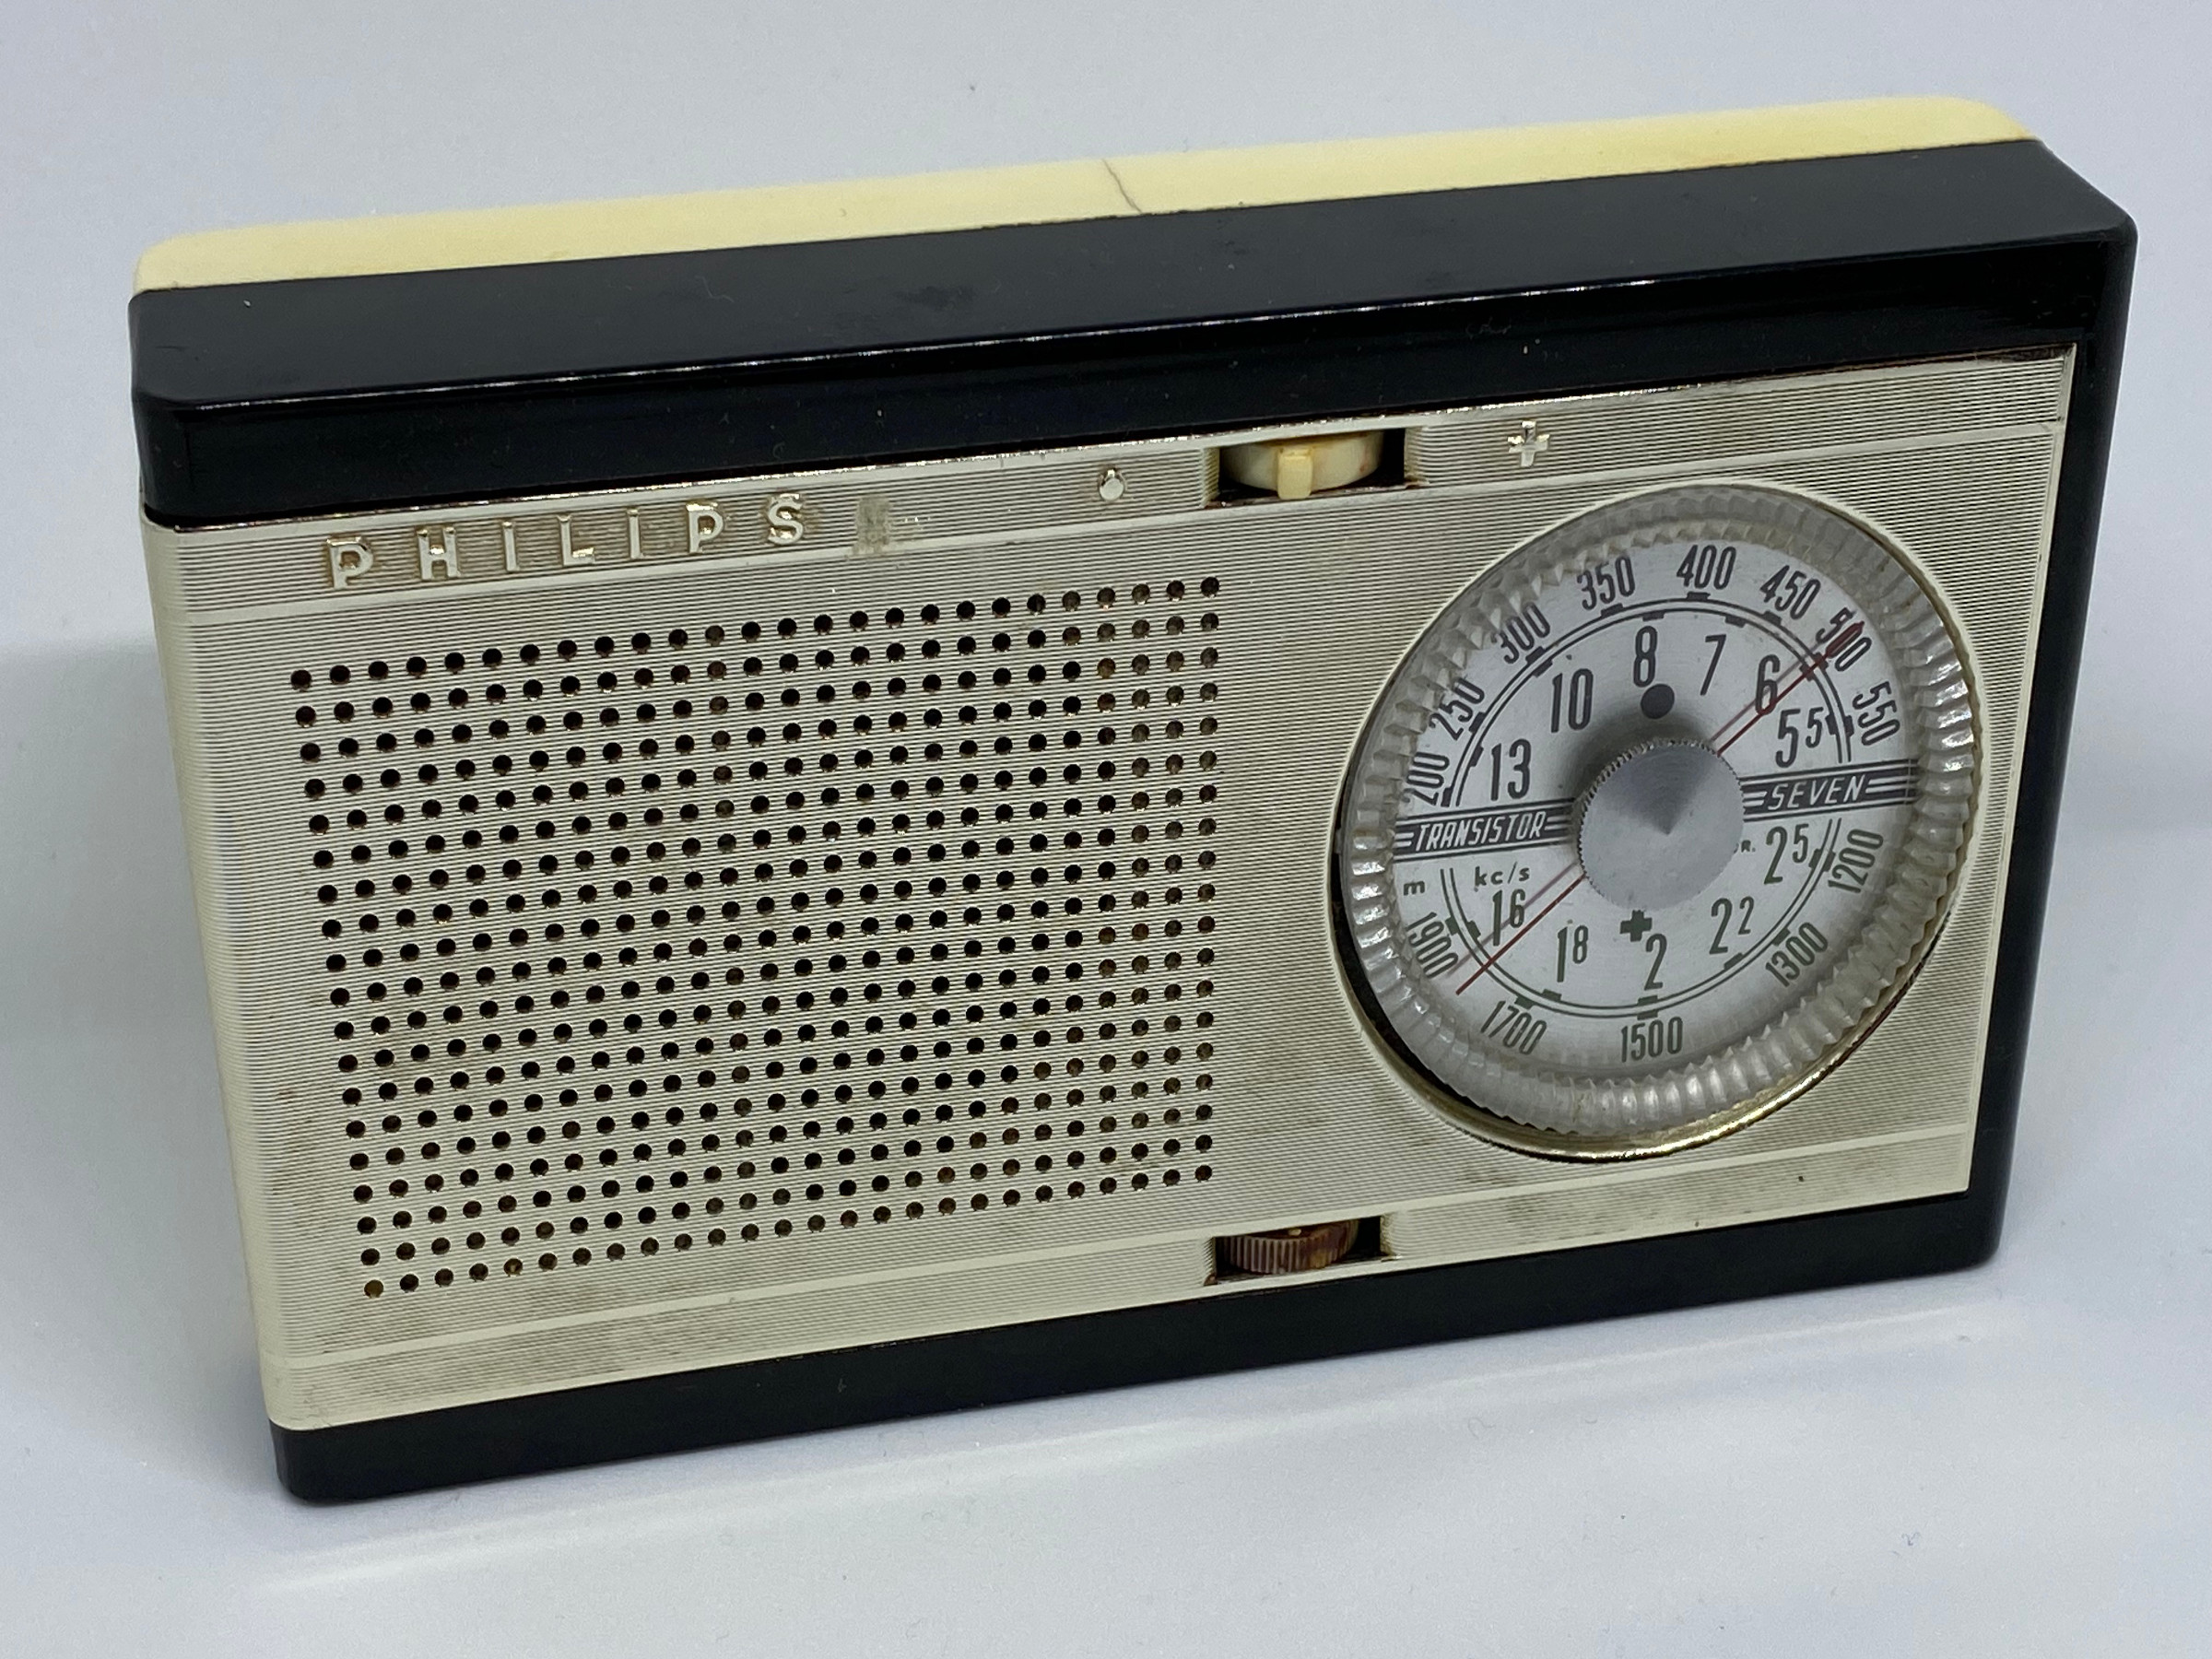 Philips' LOX 90 T transistorradio